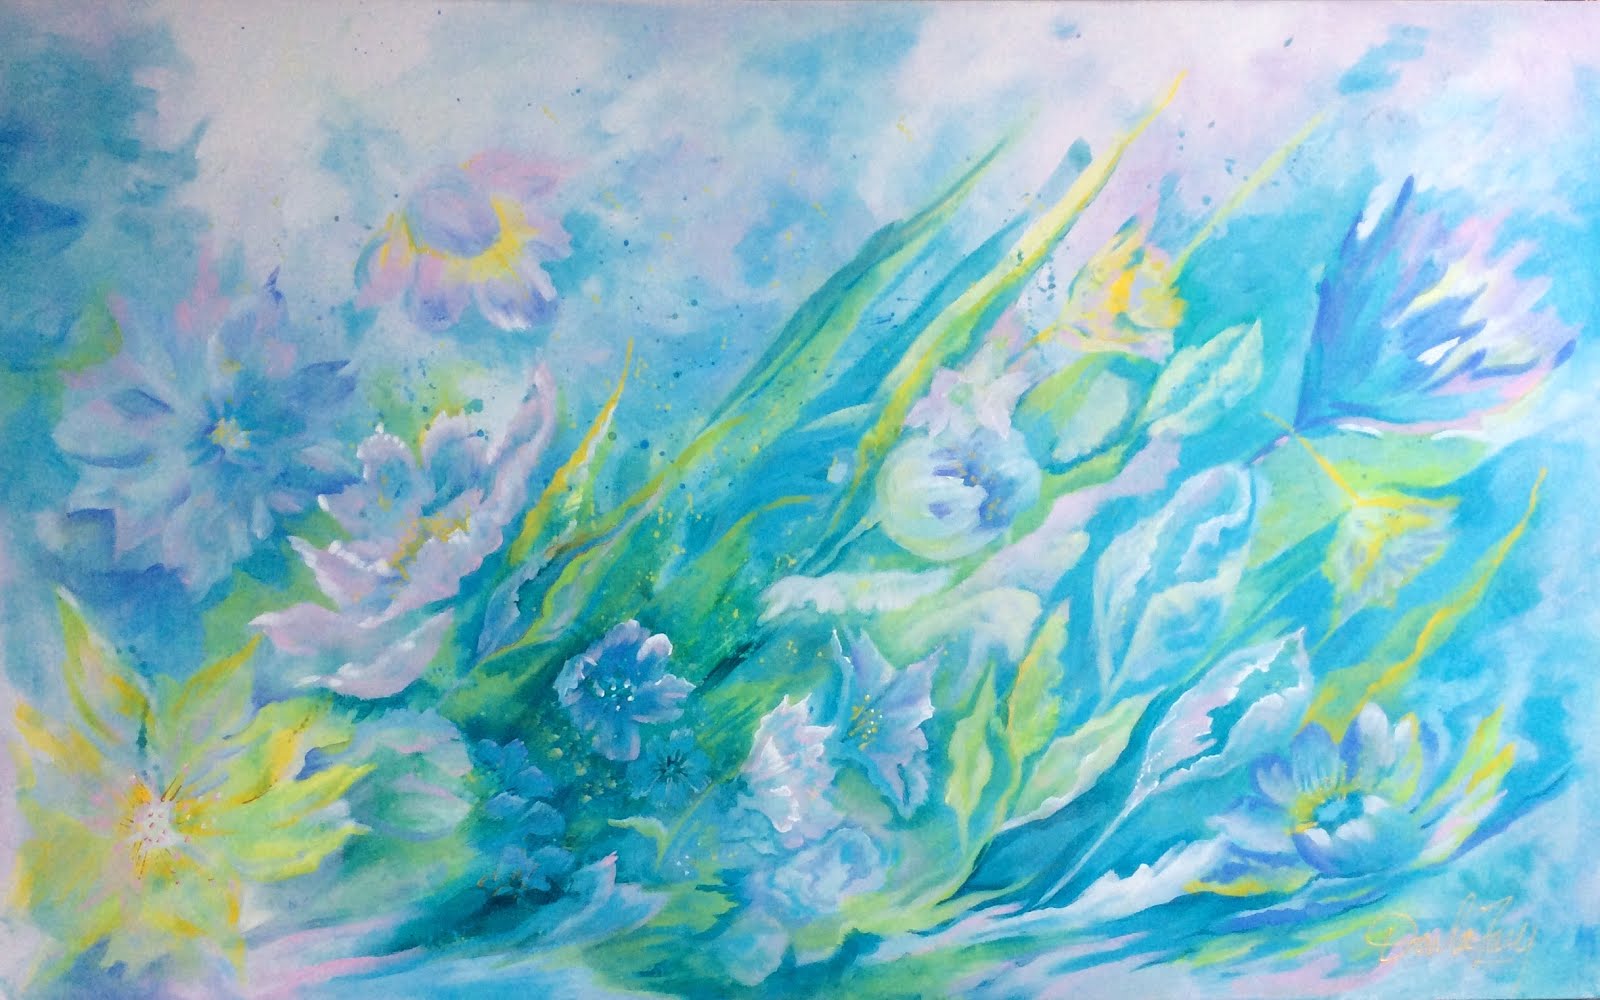 Soul Painting Feminine Water and Air